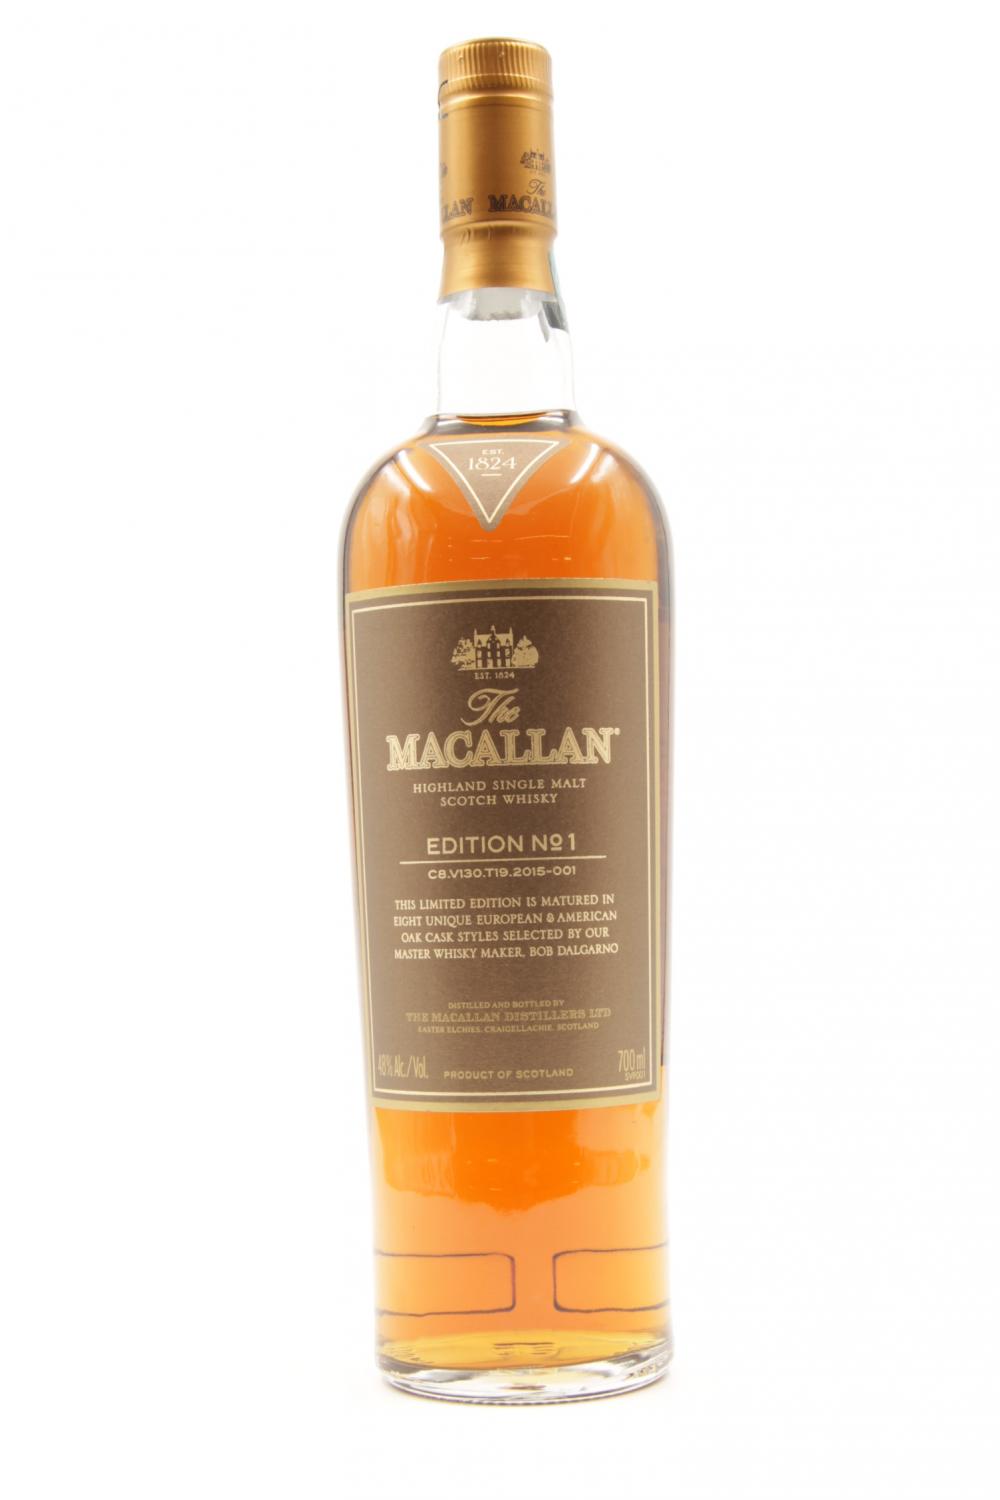 1 The Macallan Edition No 1 Single Malt Scotch Whisky Price